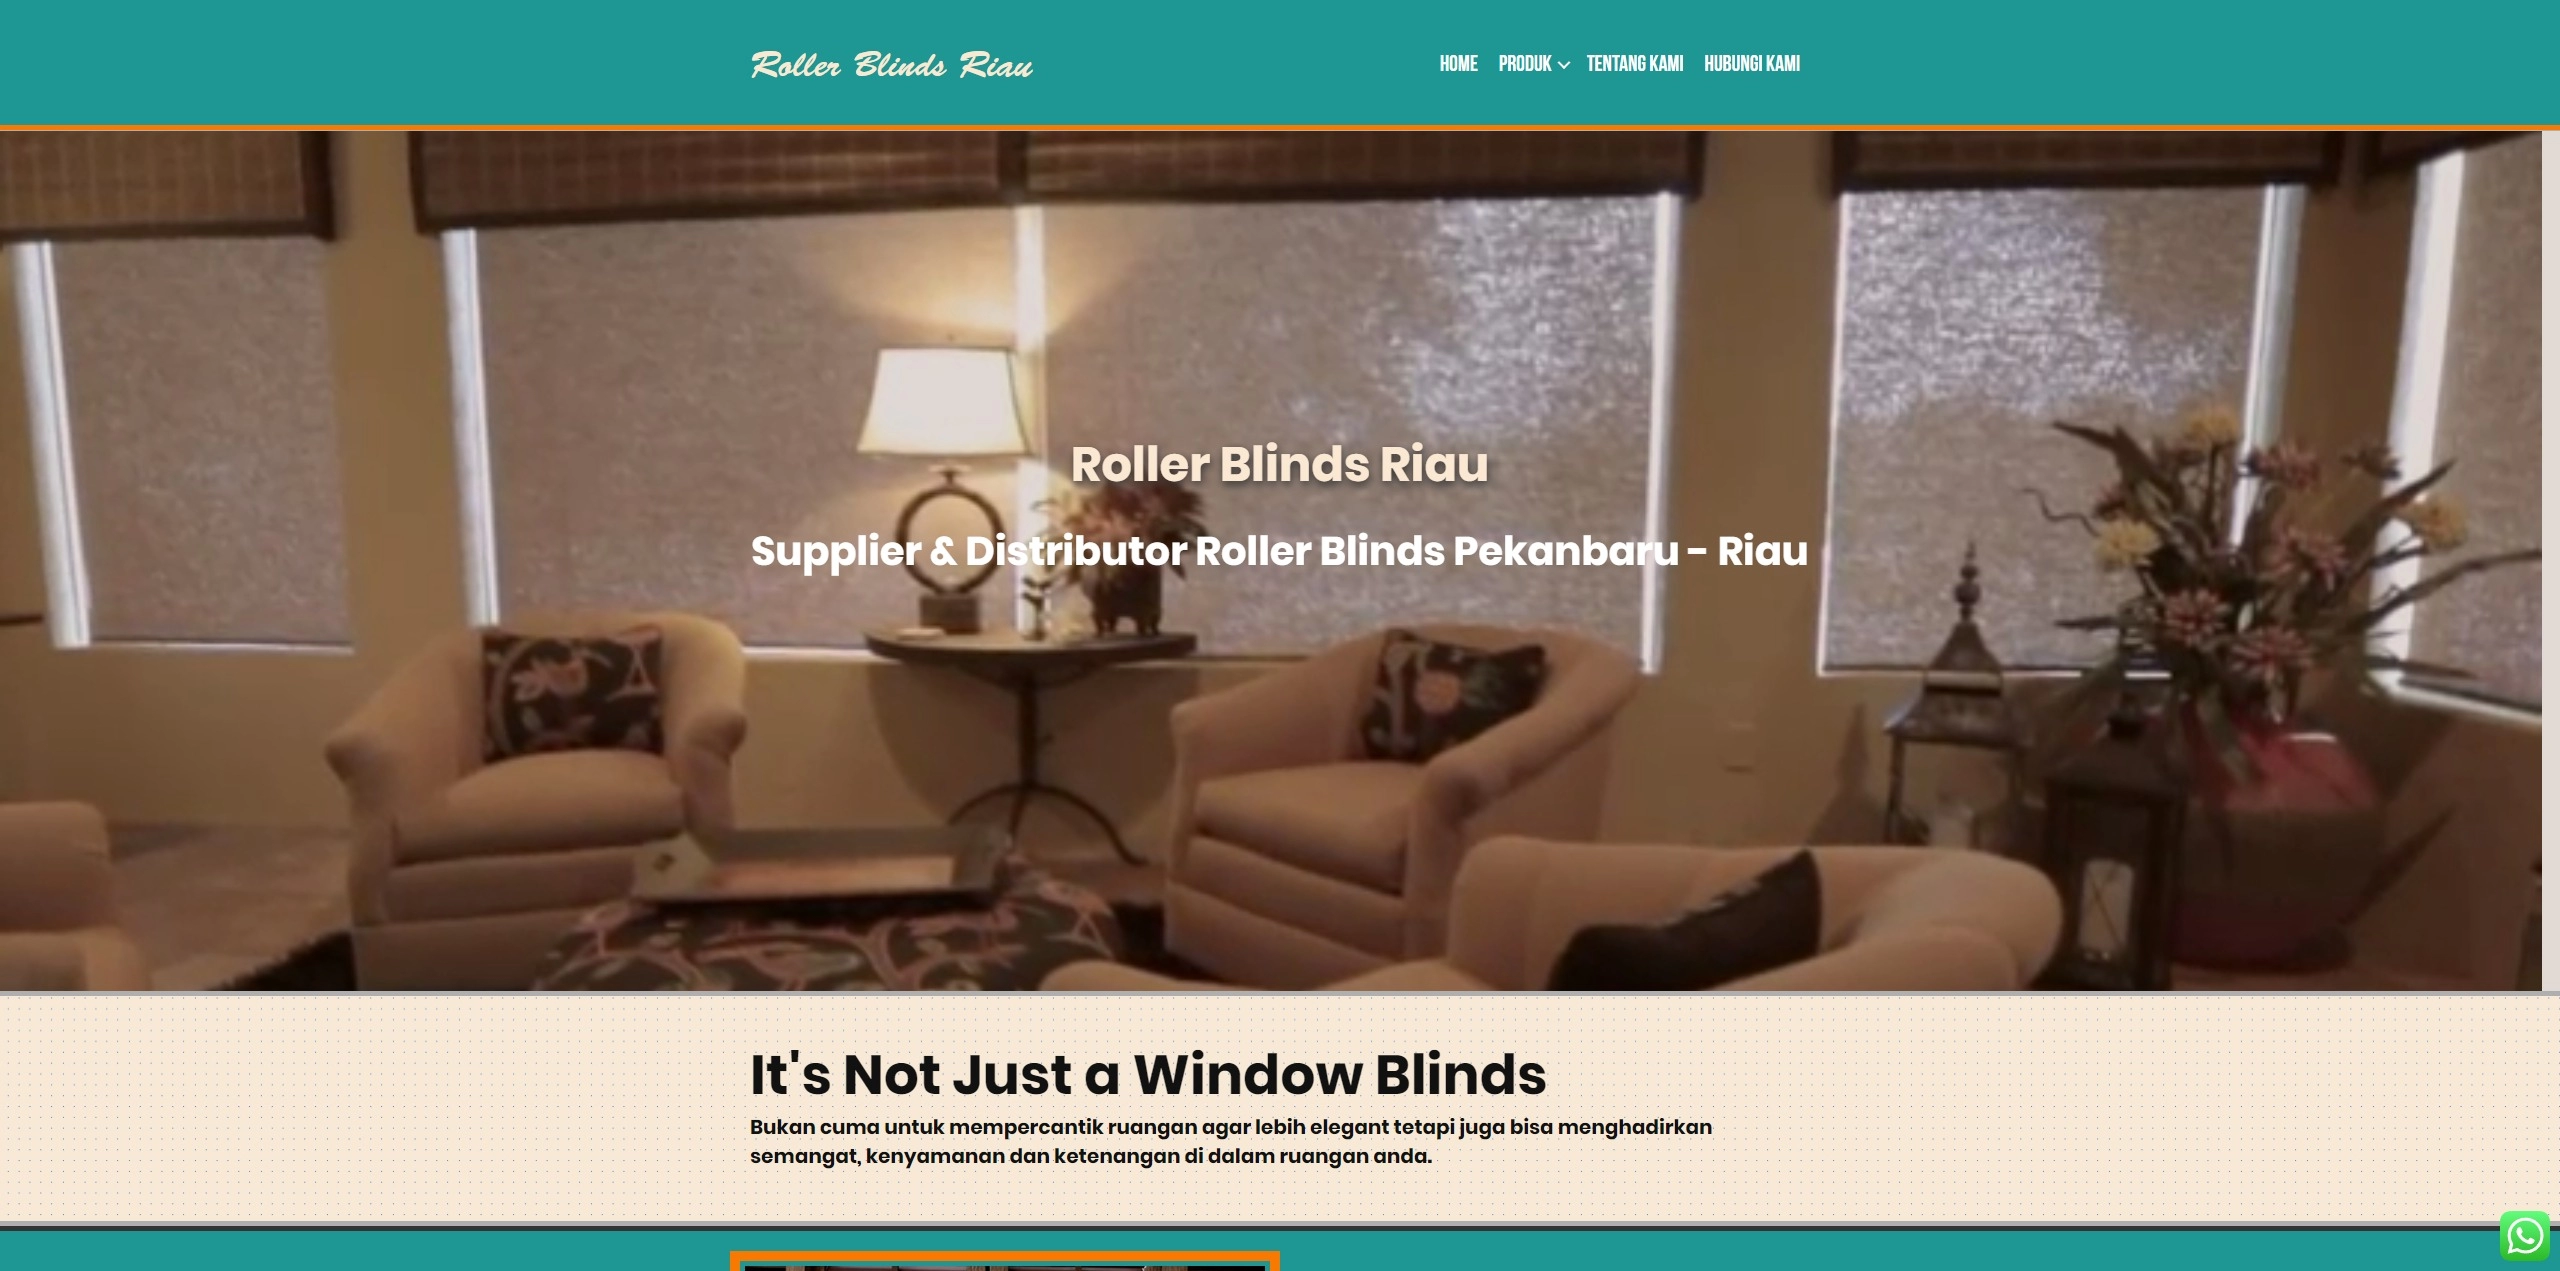 Roller Blinds Riau